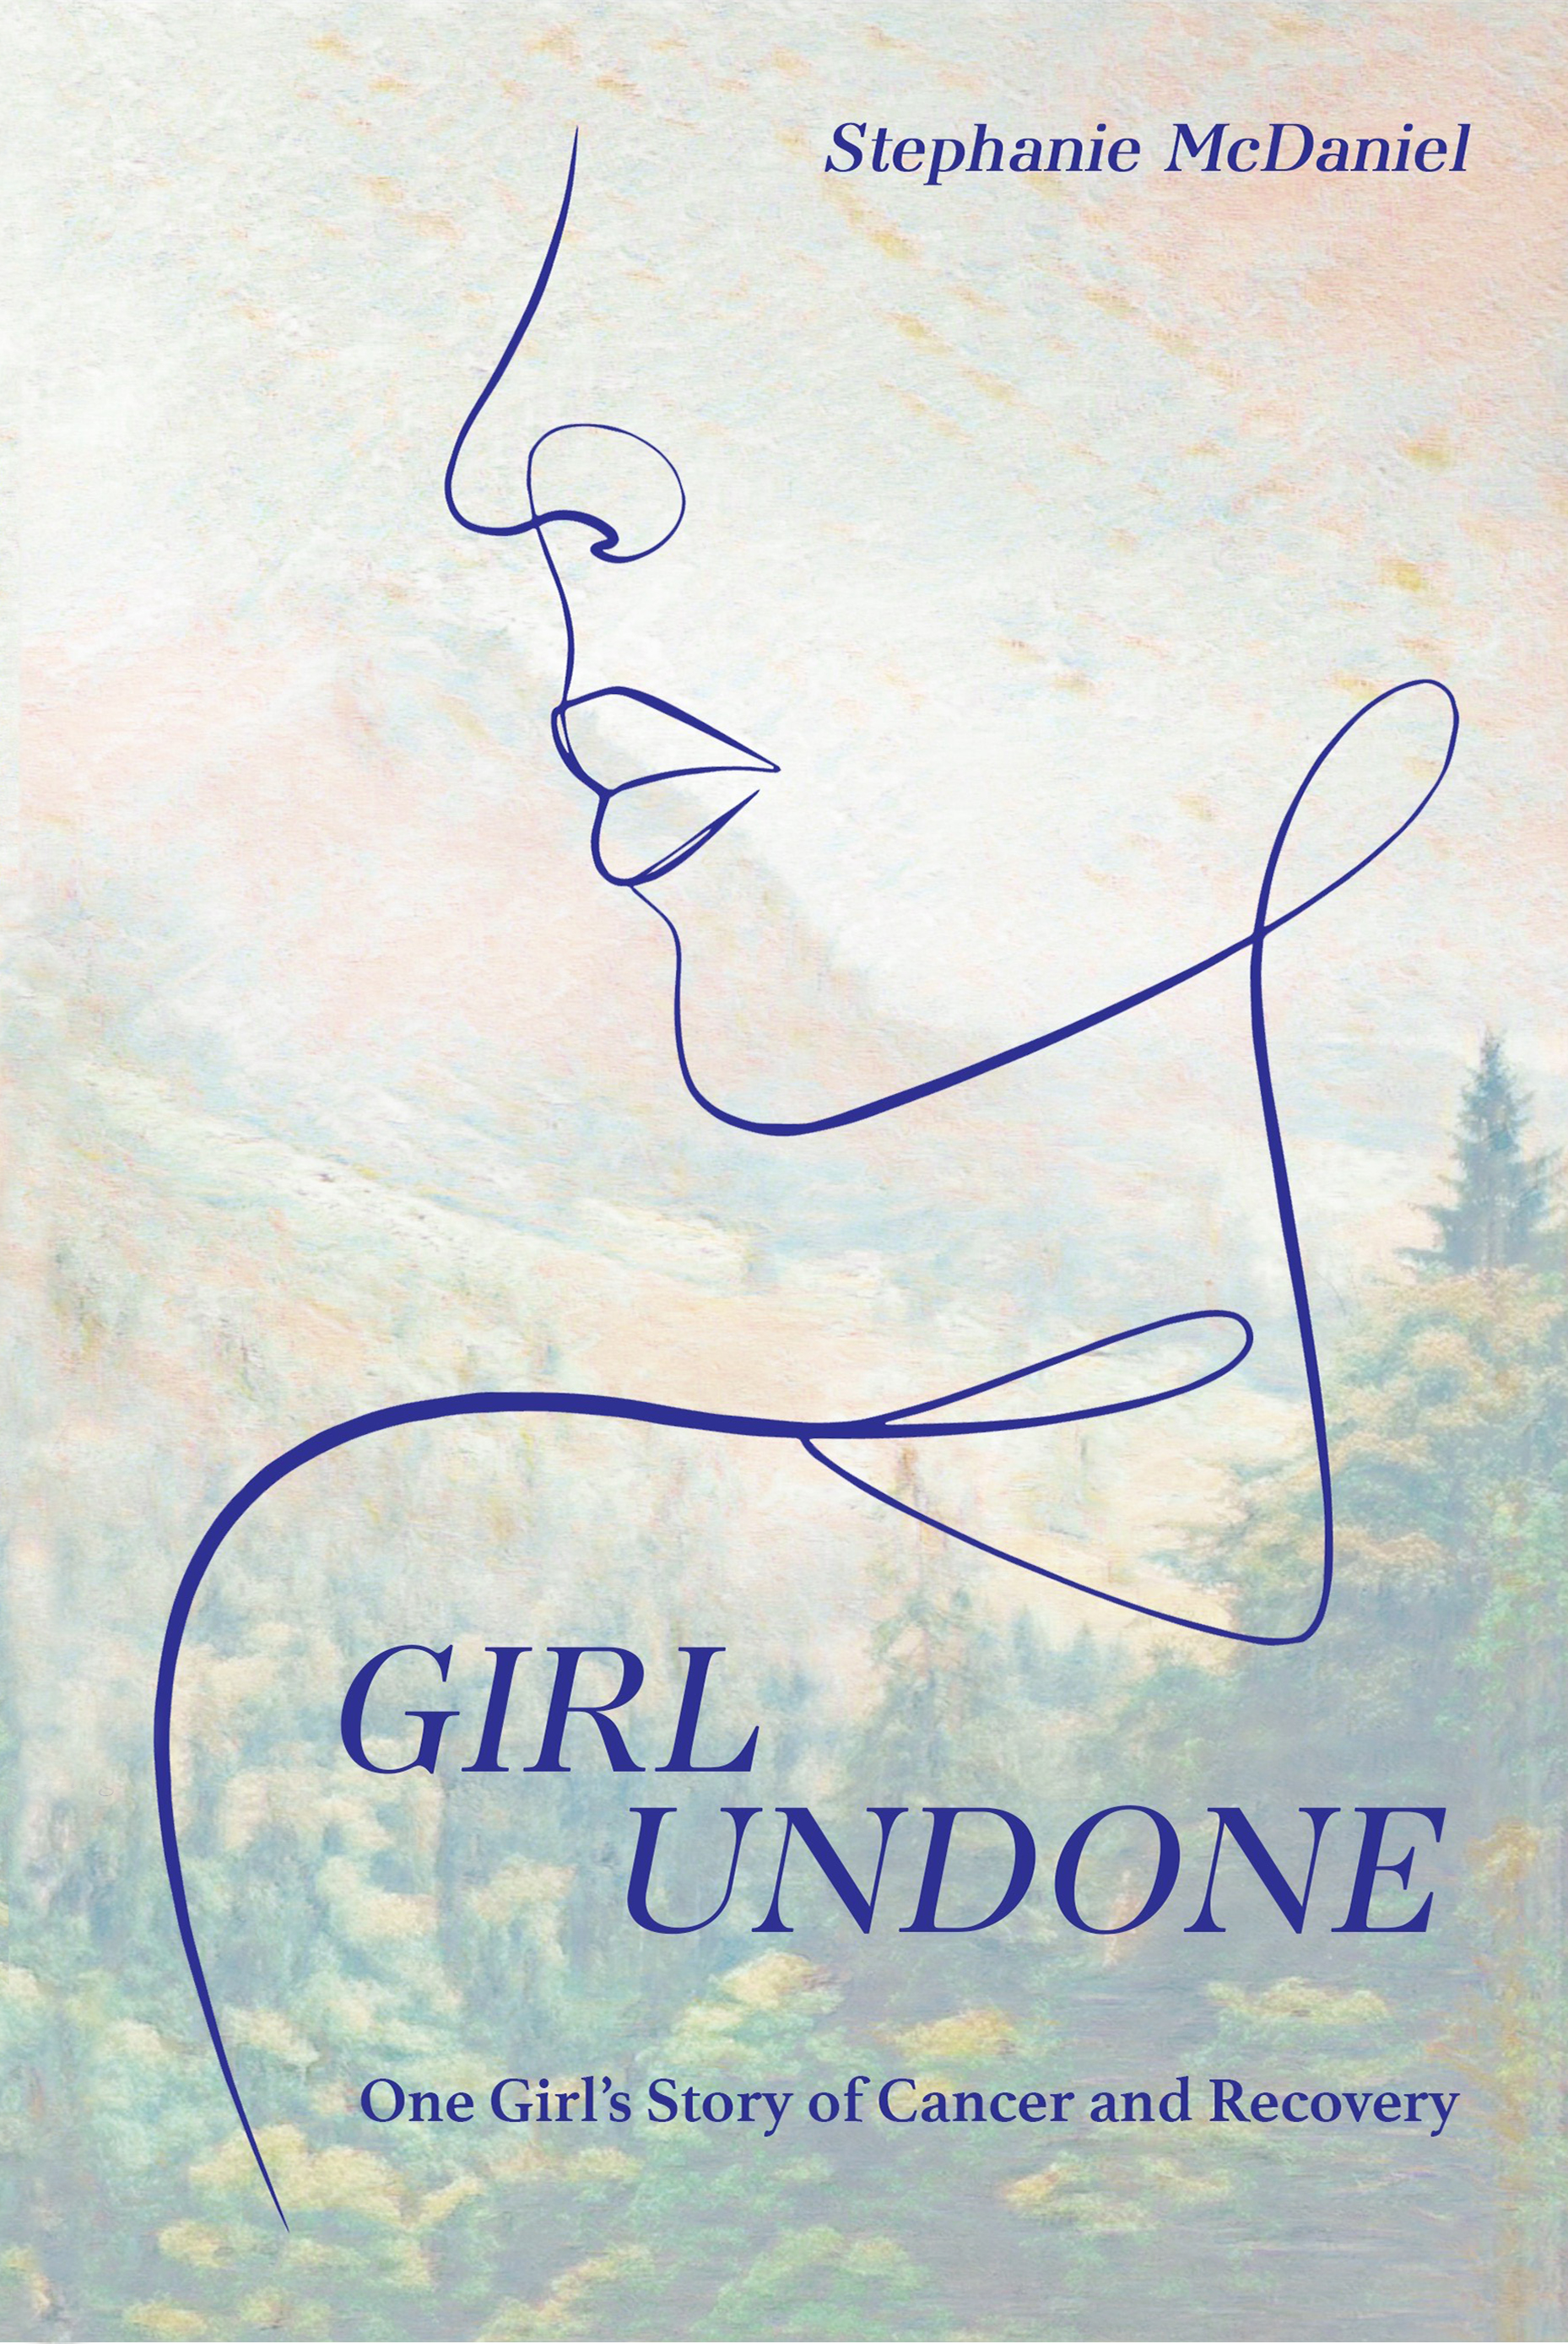 Girl Undone by Stephanie McDaniel